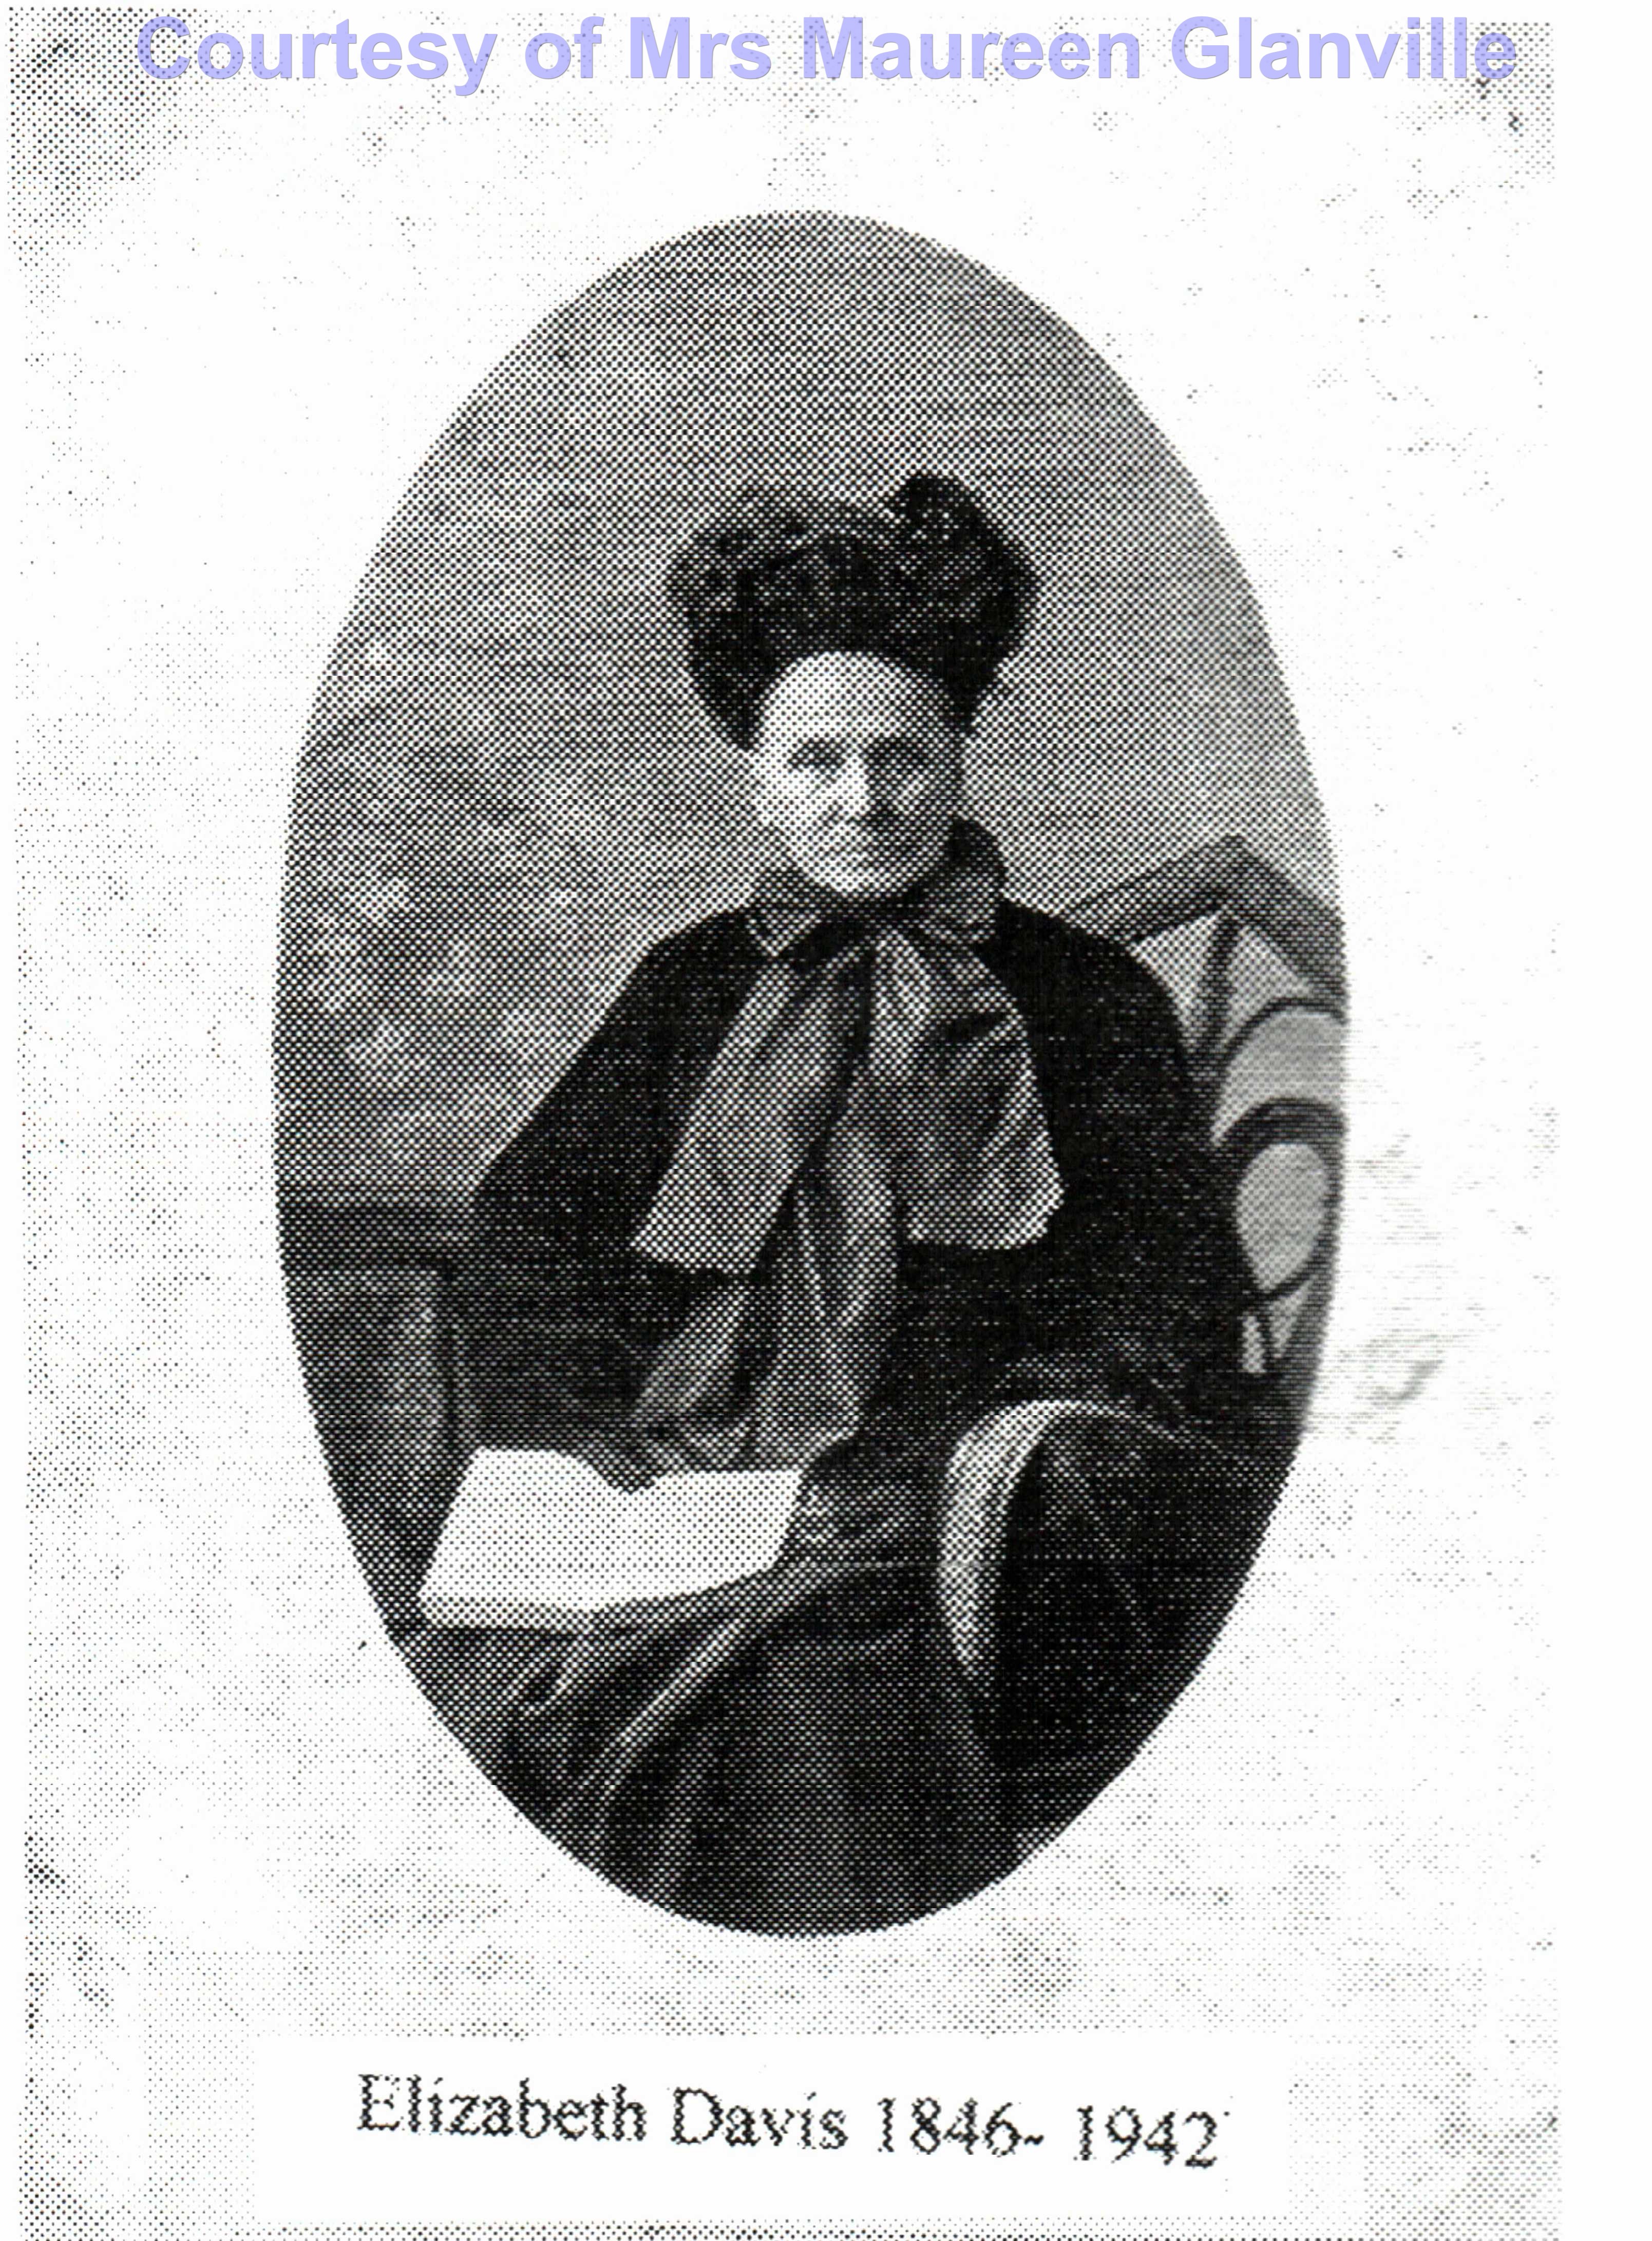 Elizabeth Davis 1846 - 1942